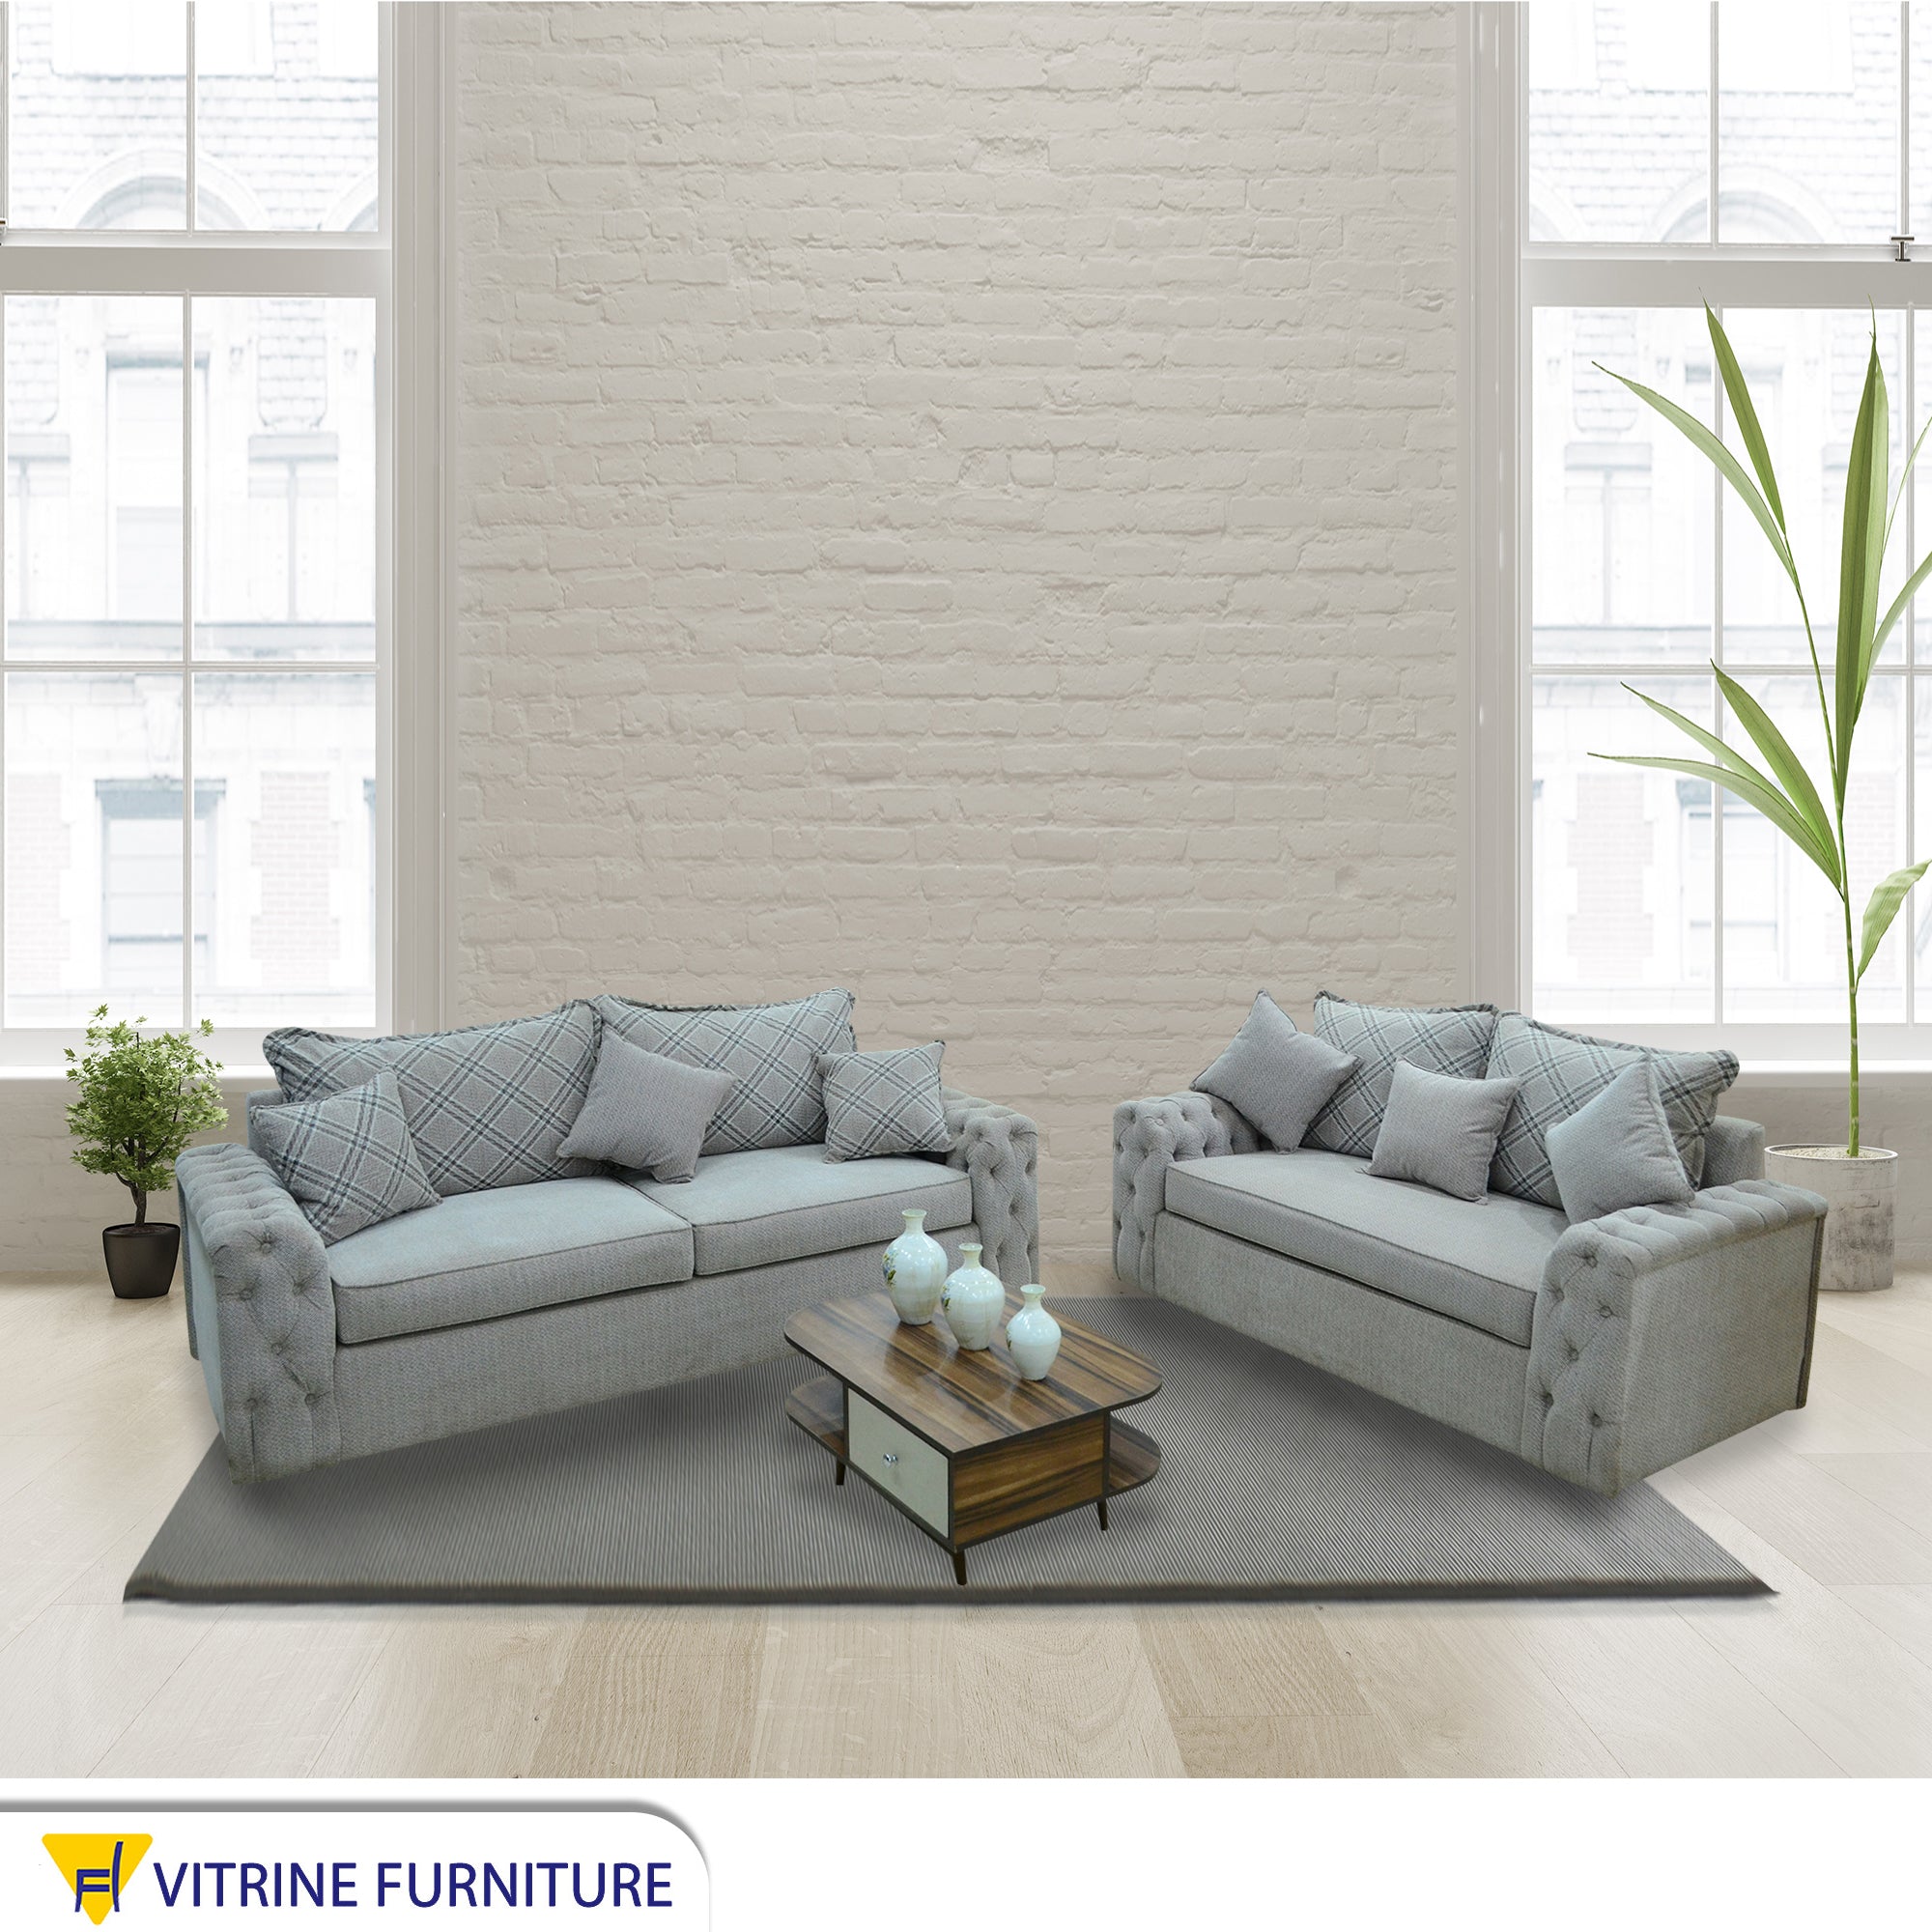 2 snow white sofa with capotanien armrests